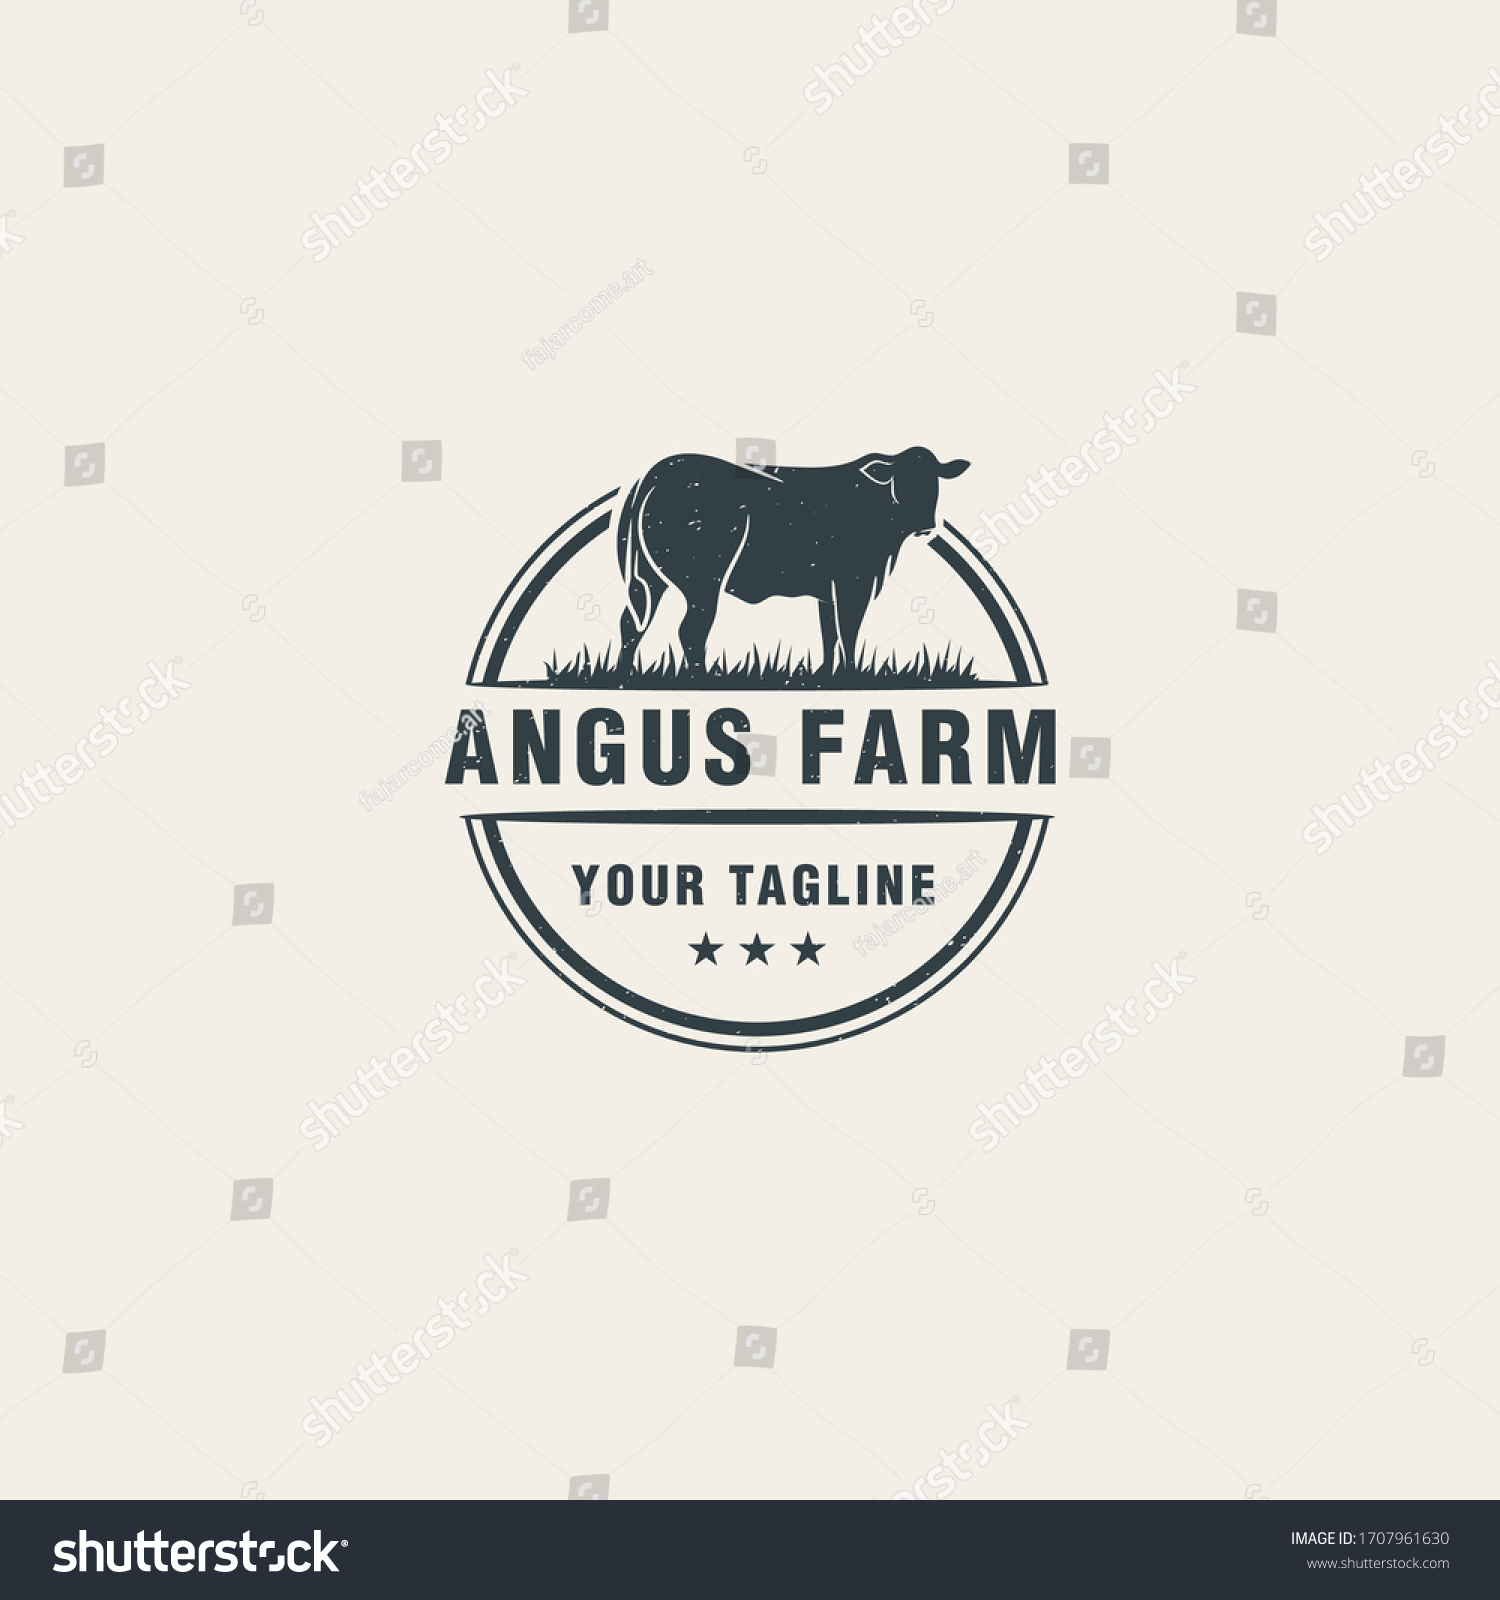 SVG of Angus farm logo design Premium Vector svg